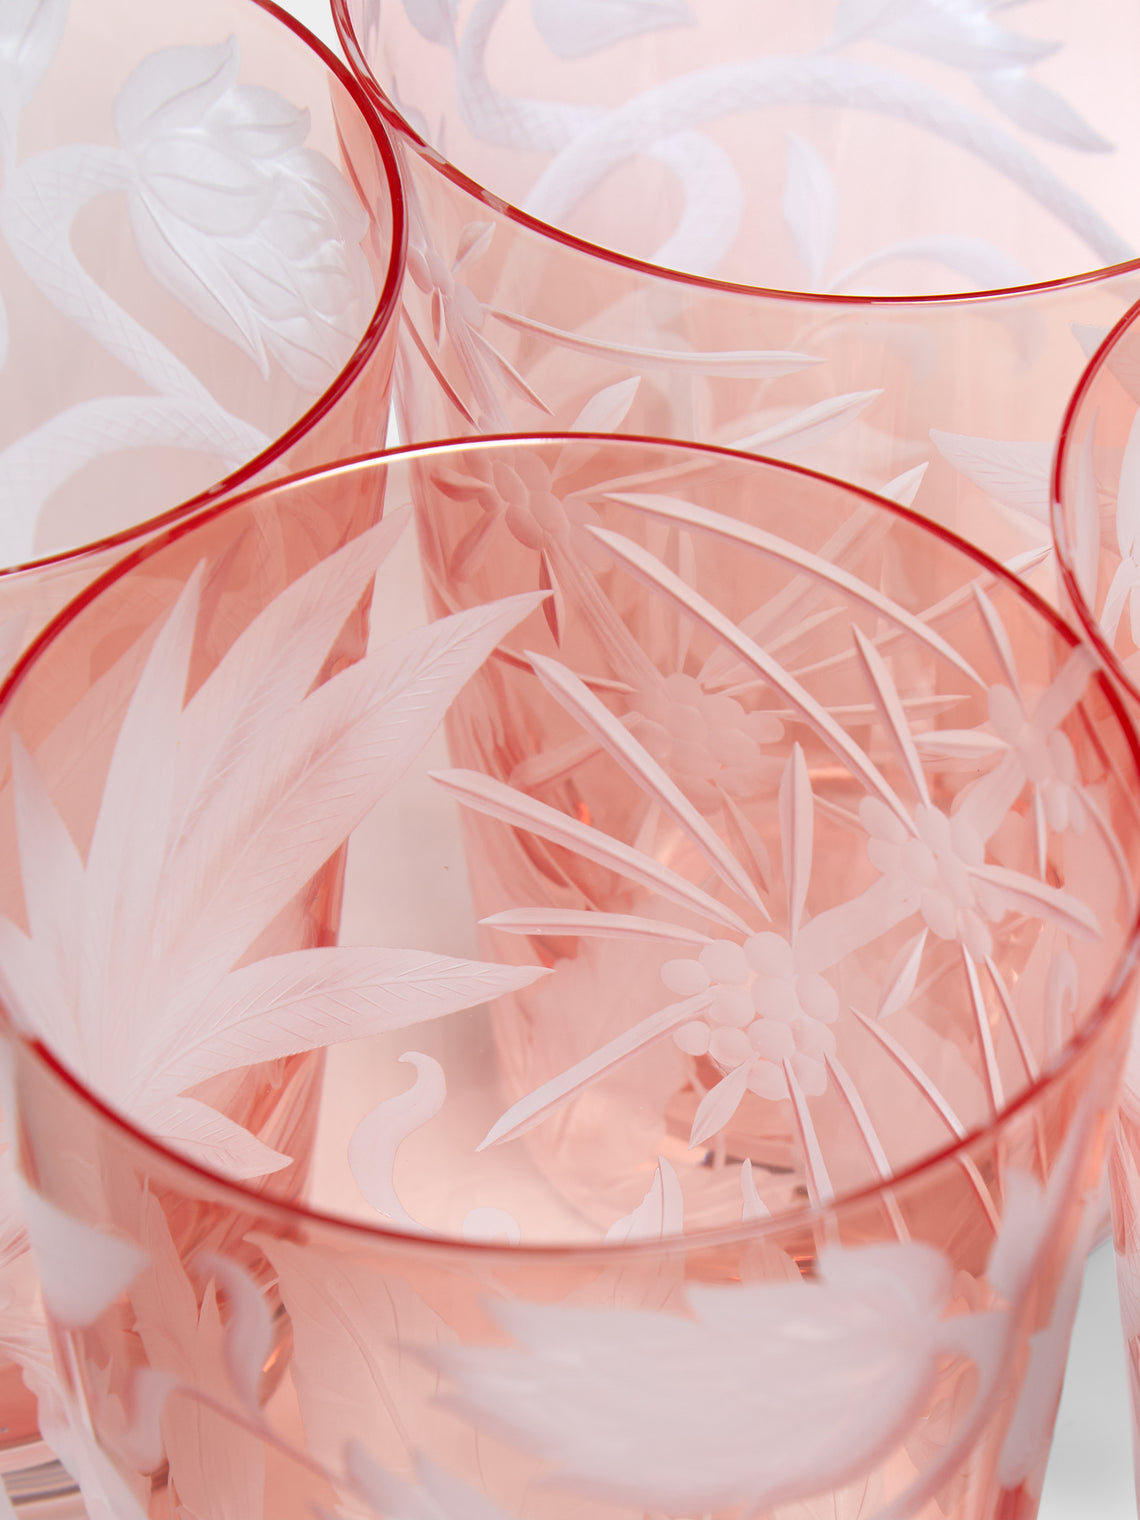 Artel - Jungle Deco Hand-Engraved Crystal Tumblers (Set of 4) - Pink - ABASK